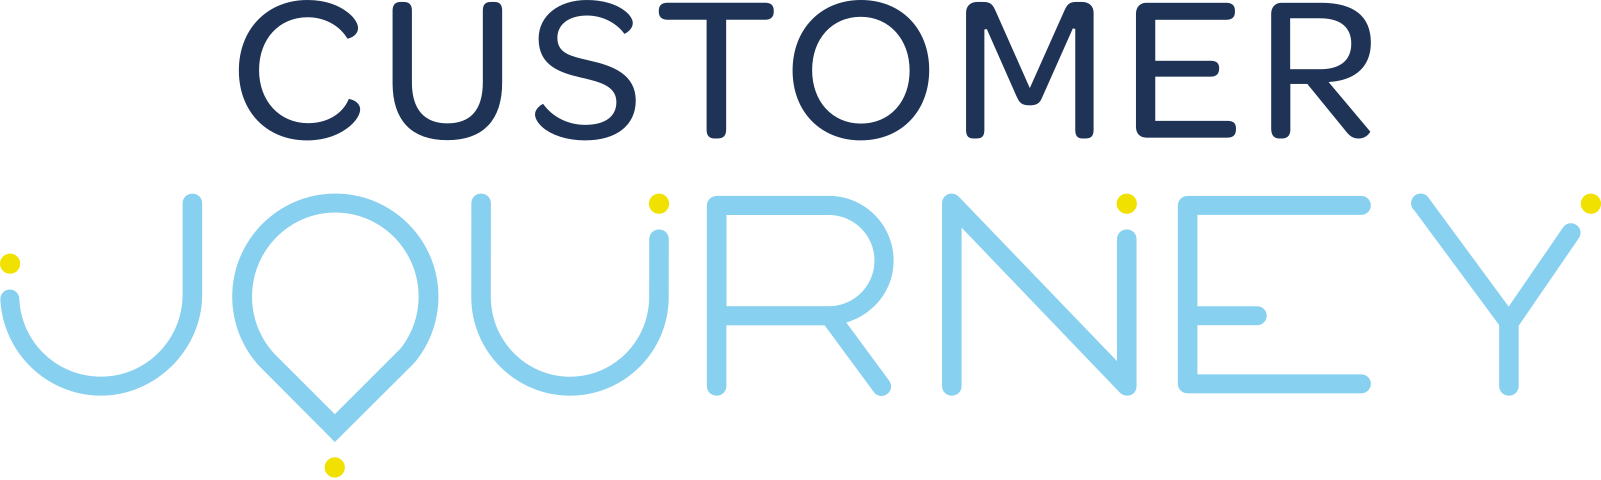 CustomerJourney_logo